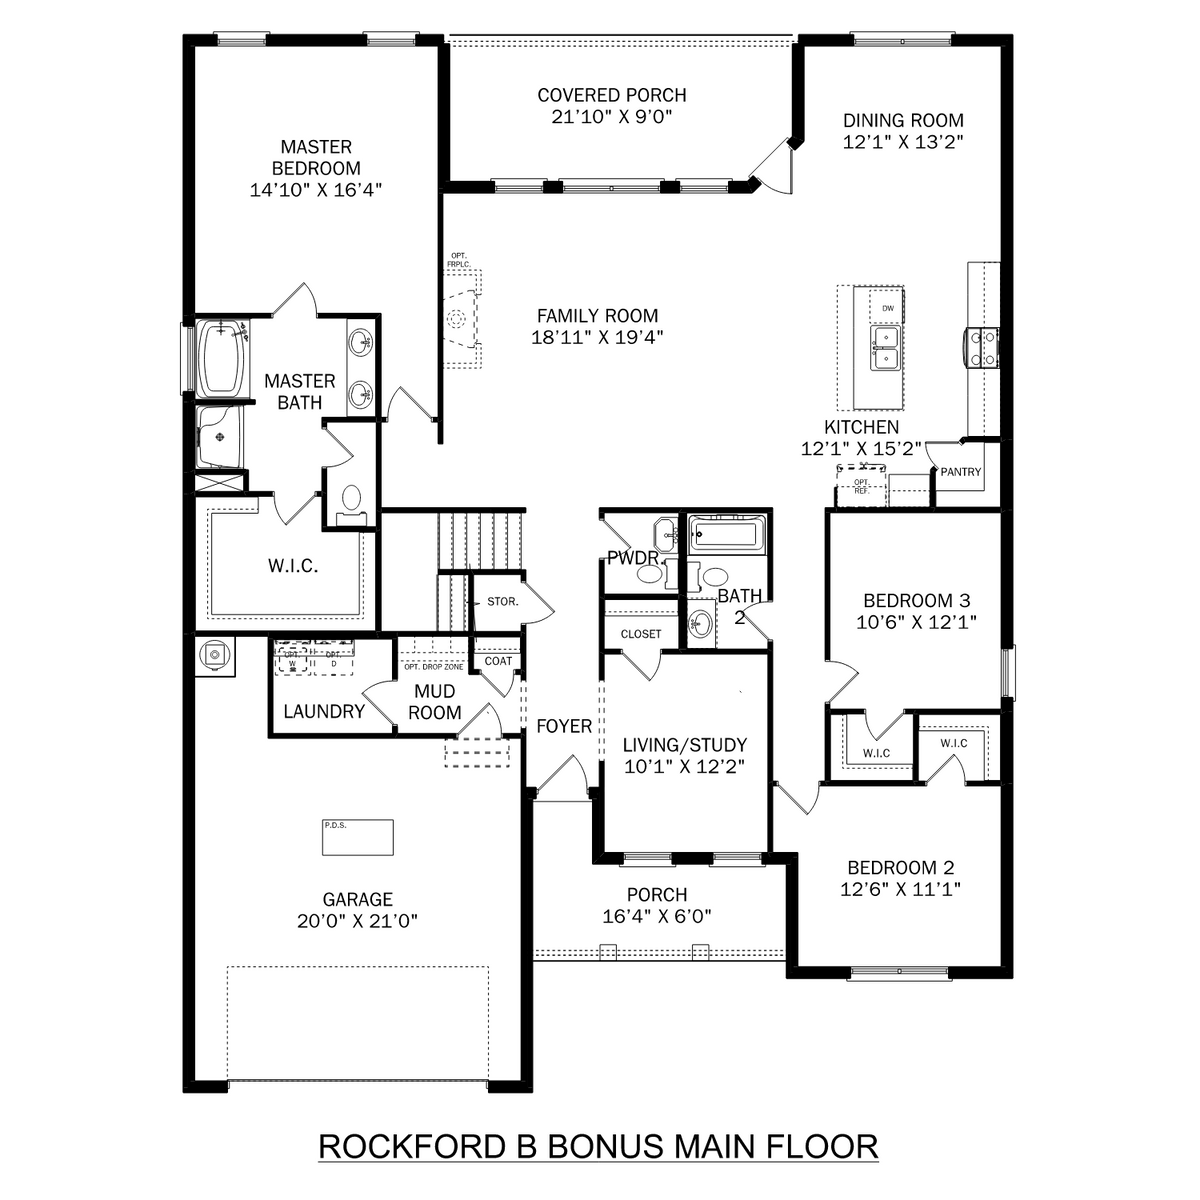 1 - The Rockford B with Bonus buildable floor plan layout in Davidson Homes' North Ridge community.